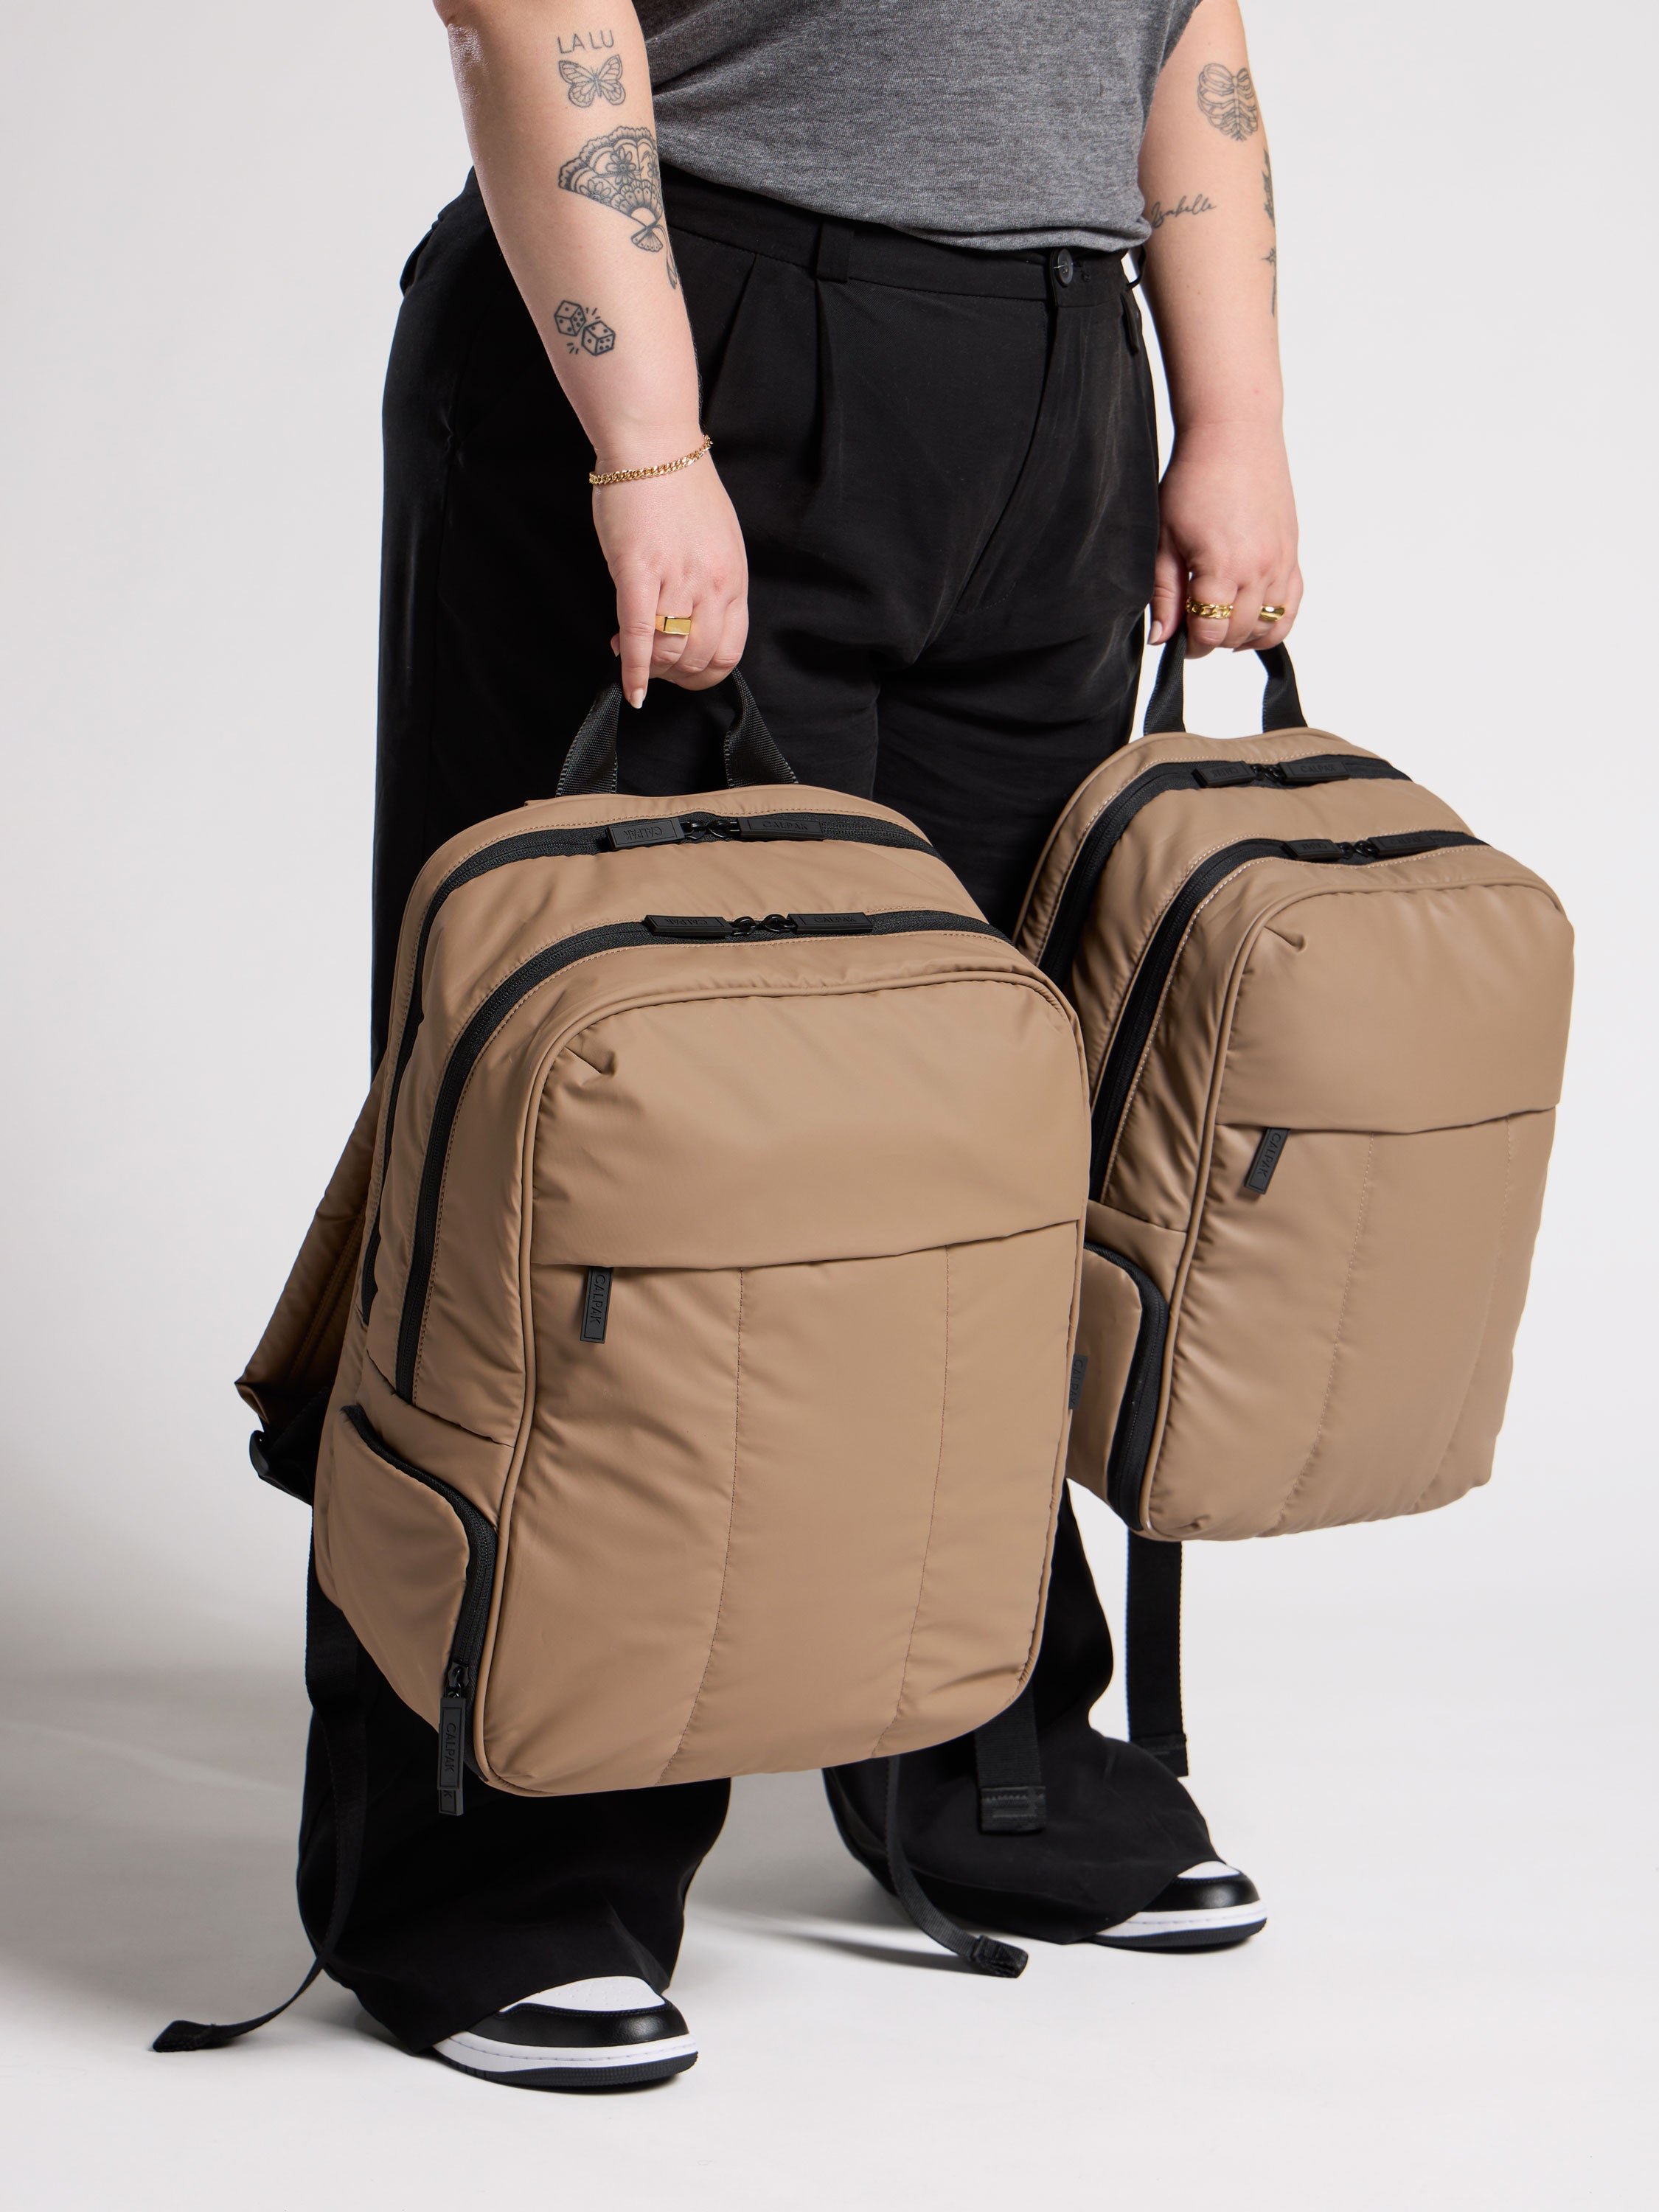 Terra Large 50L Duffel Backpack